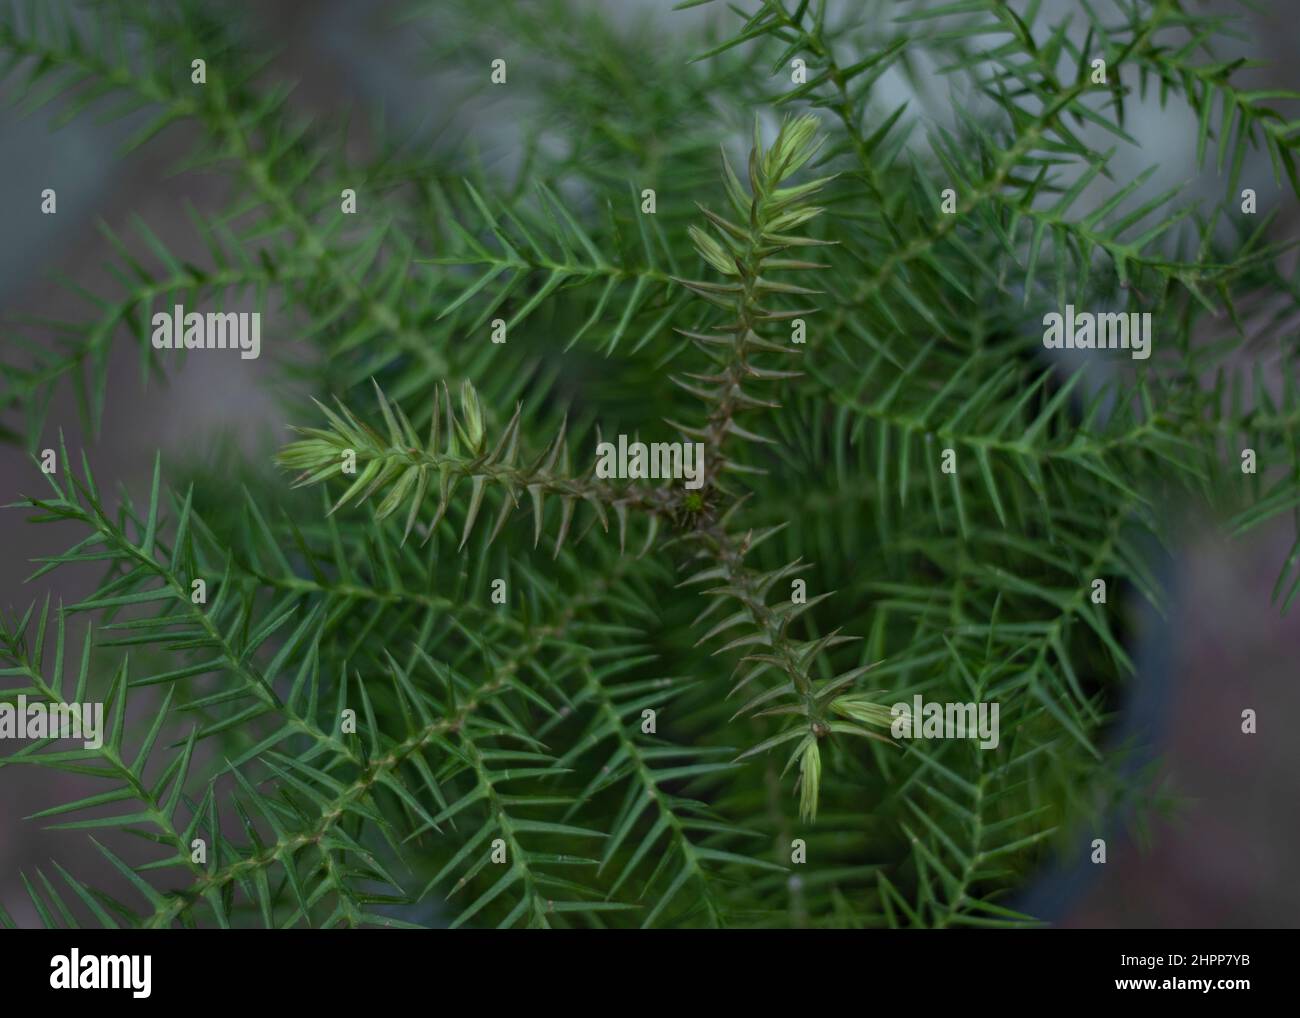 Araucaria cunninghamii colonial pine closeup topview Stock Photo